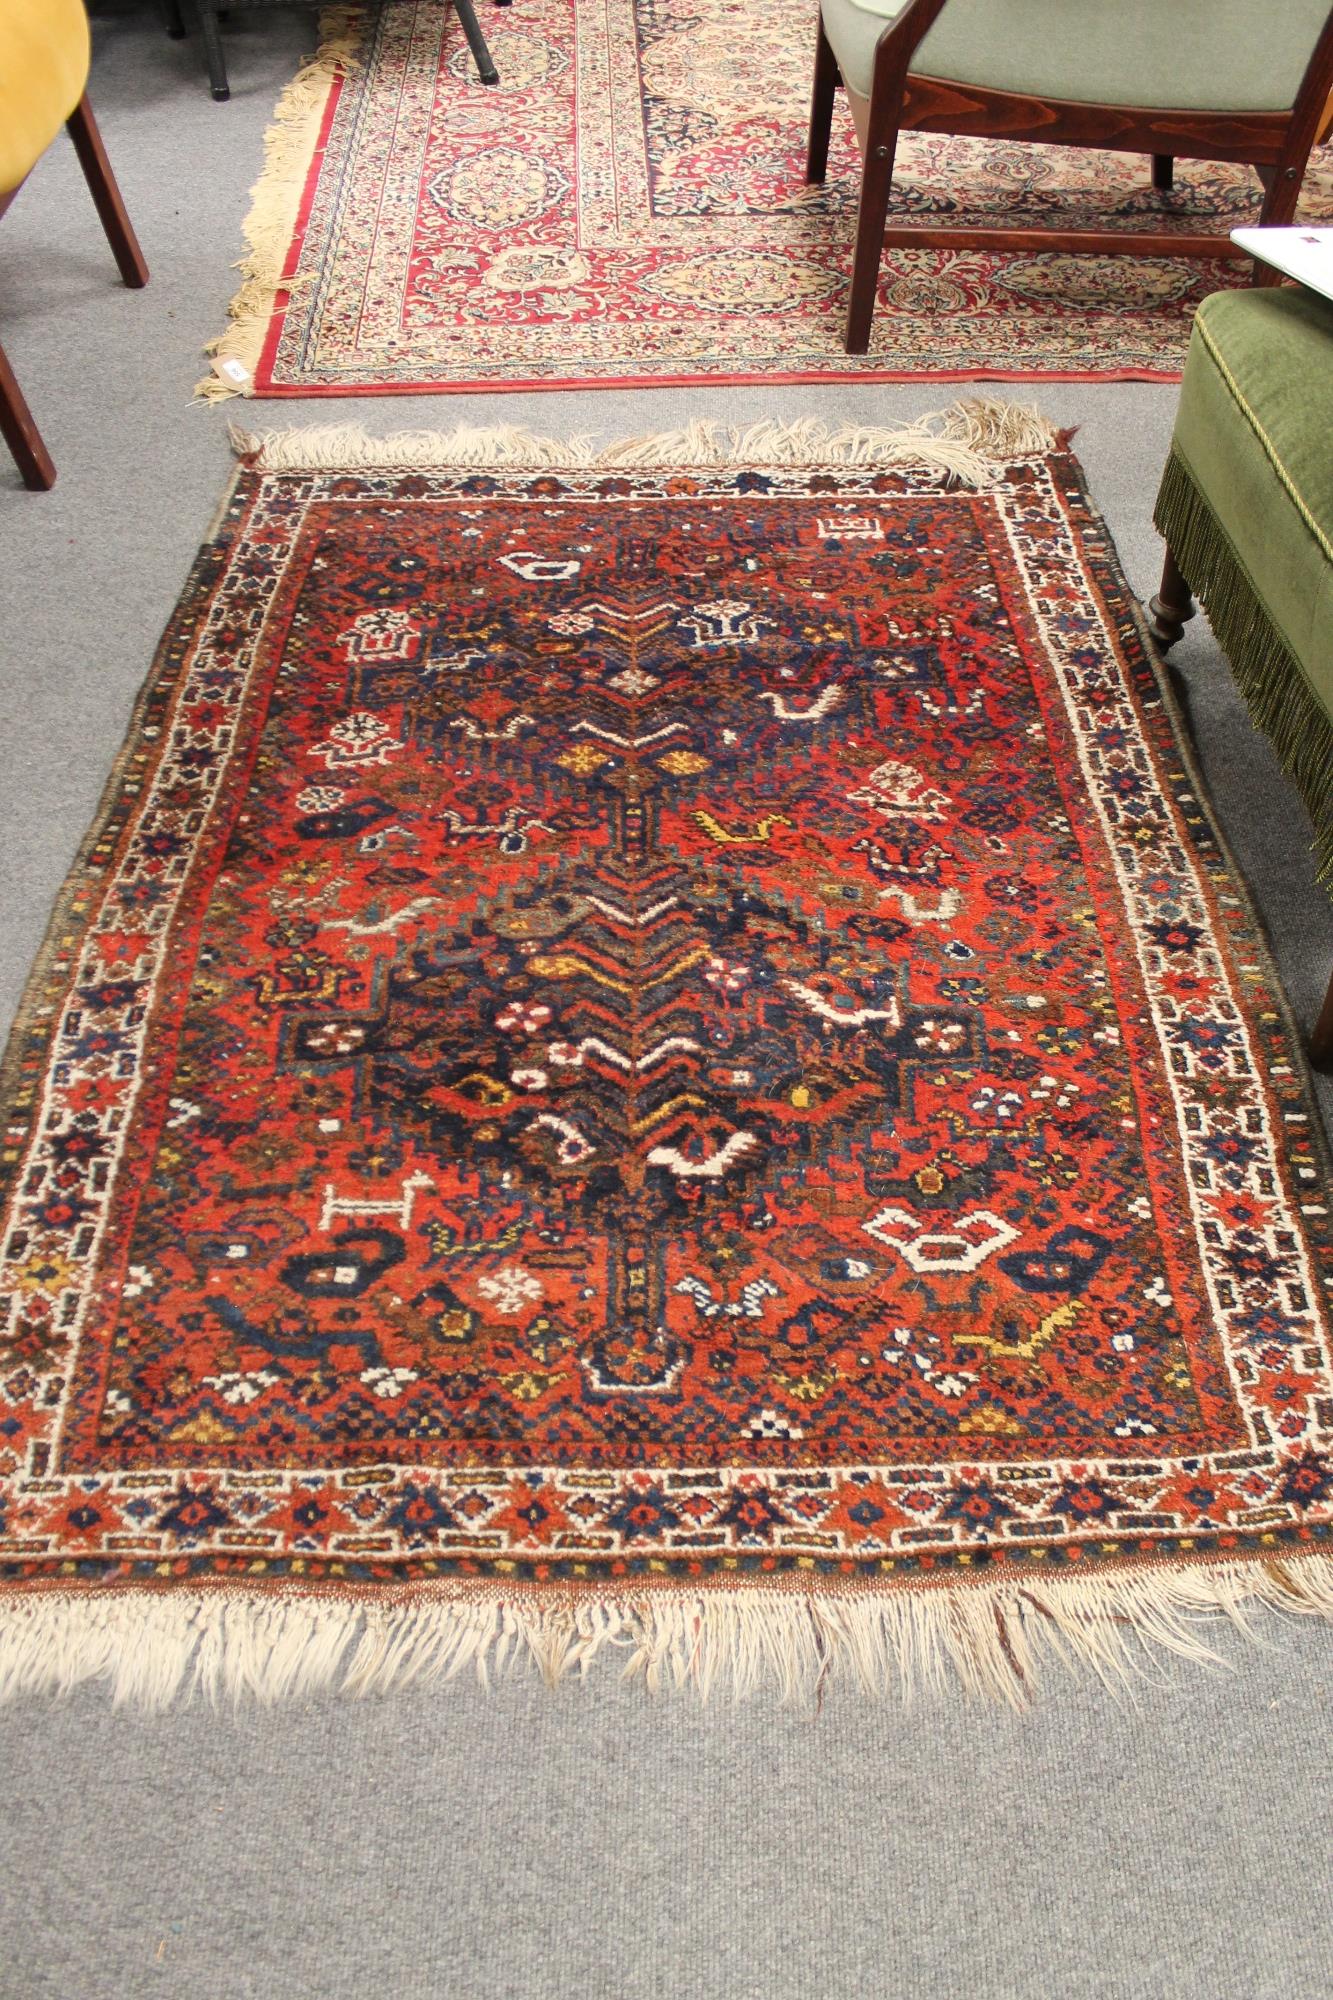 A fringed Persian carpet